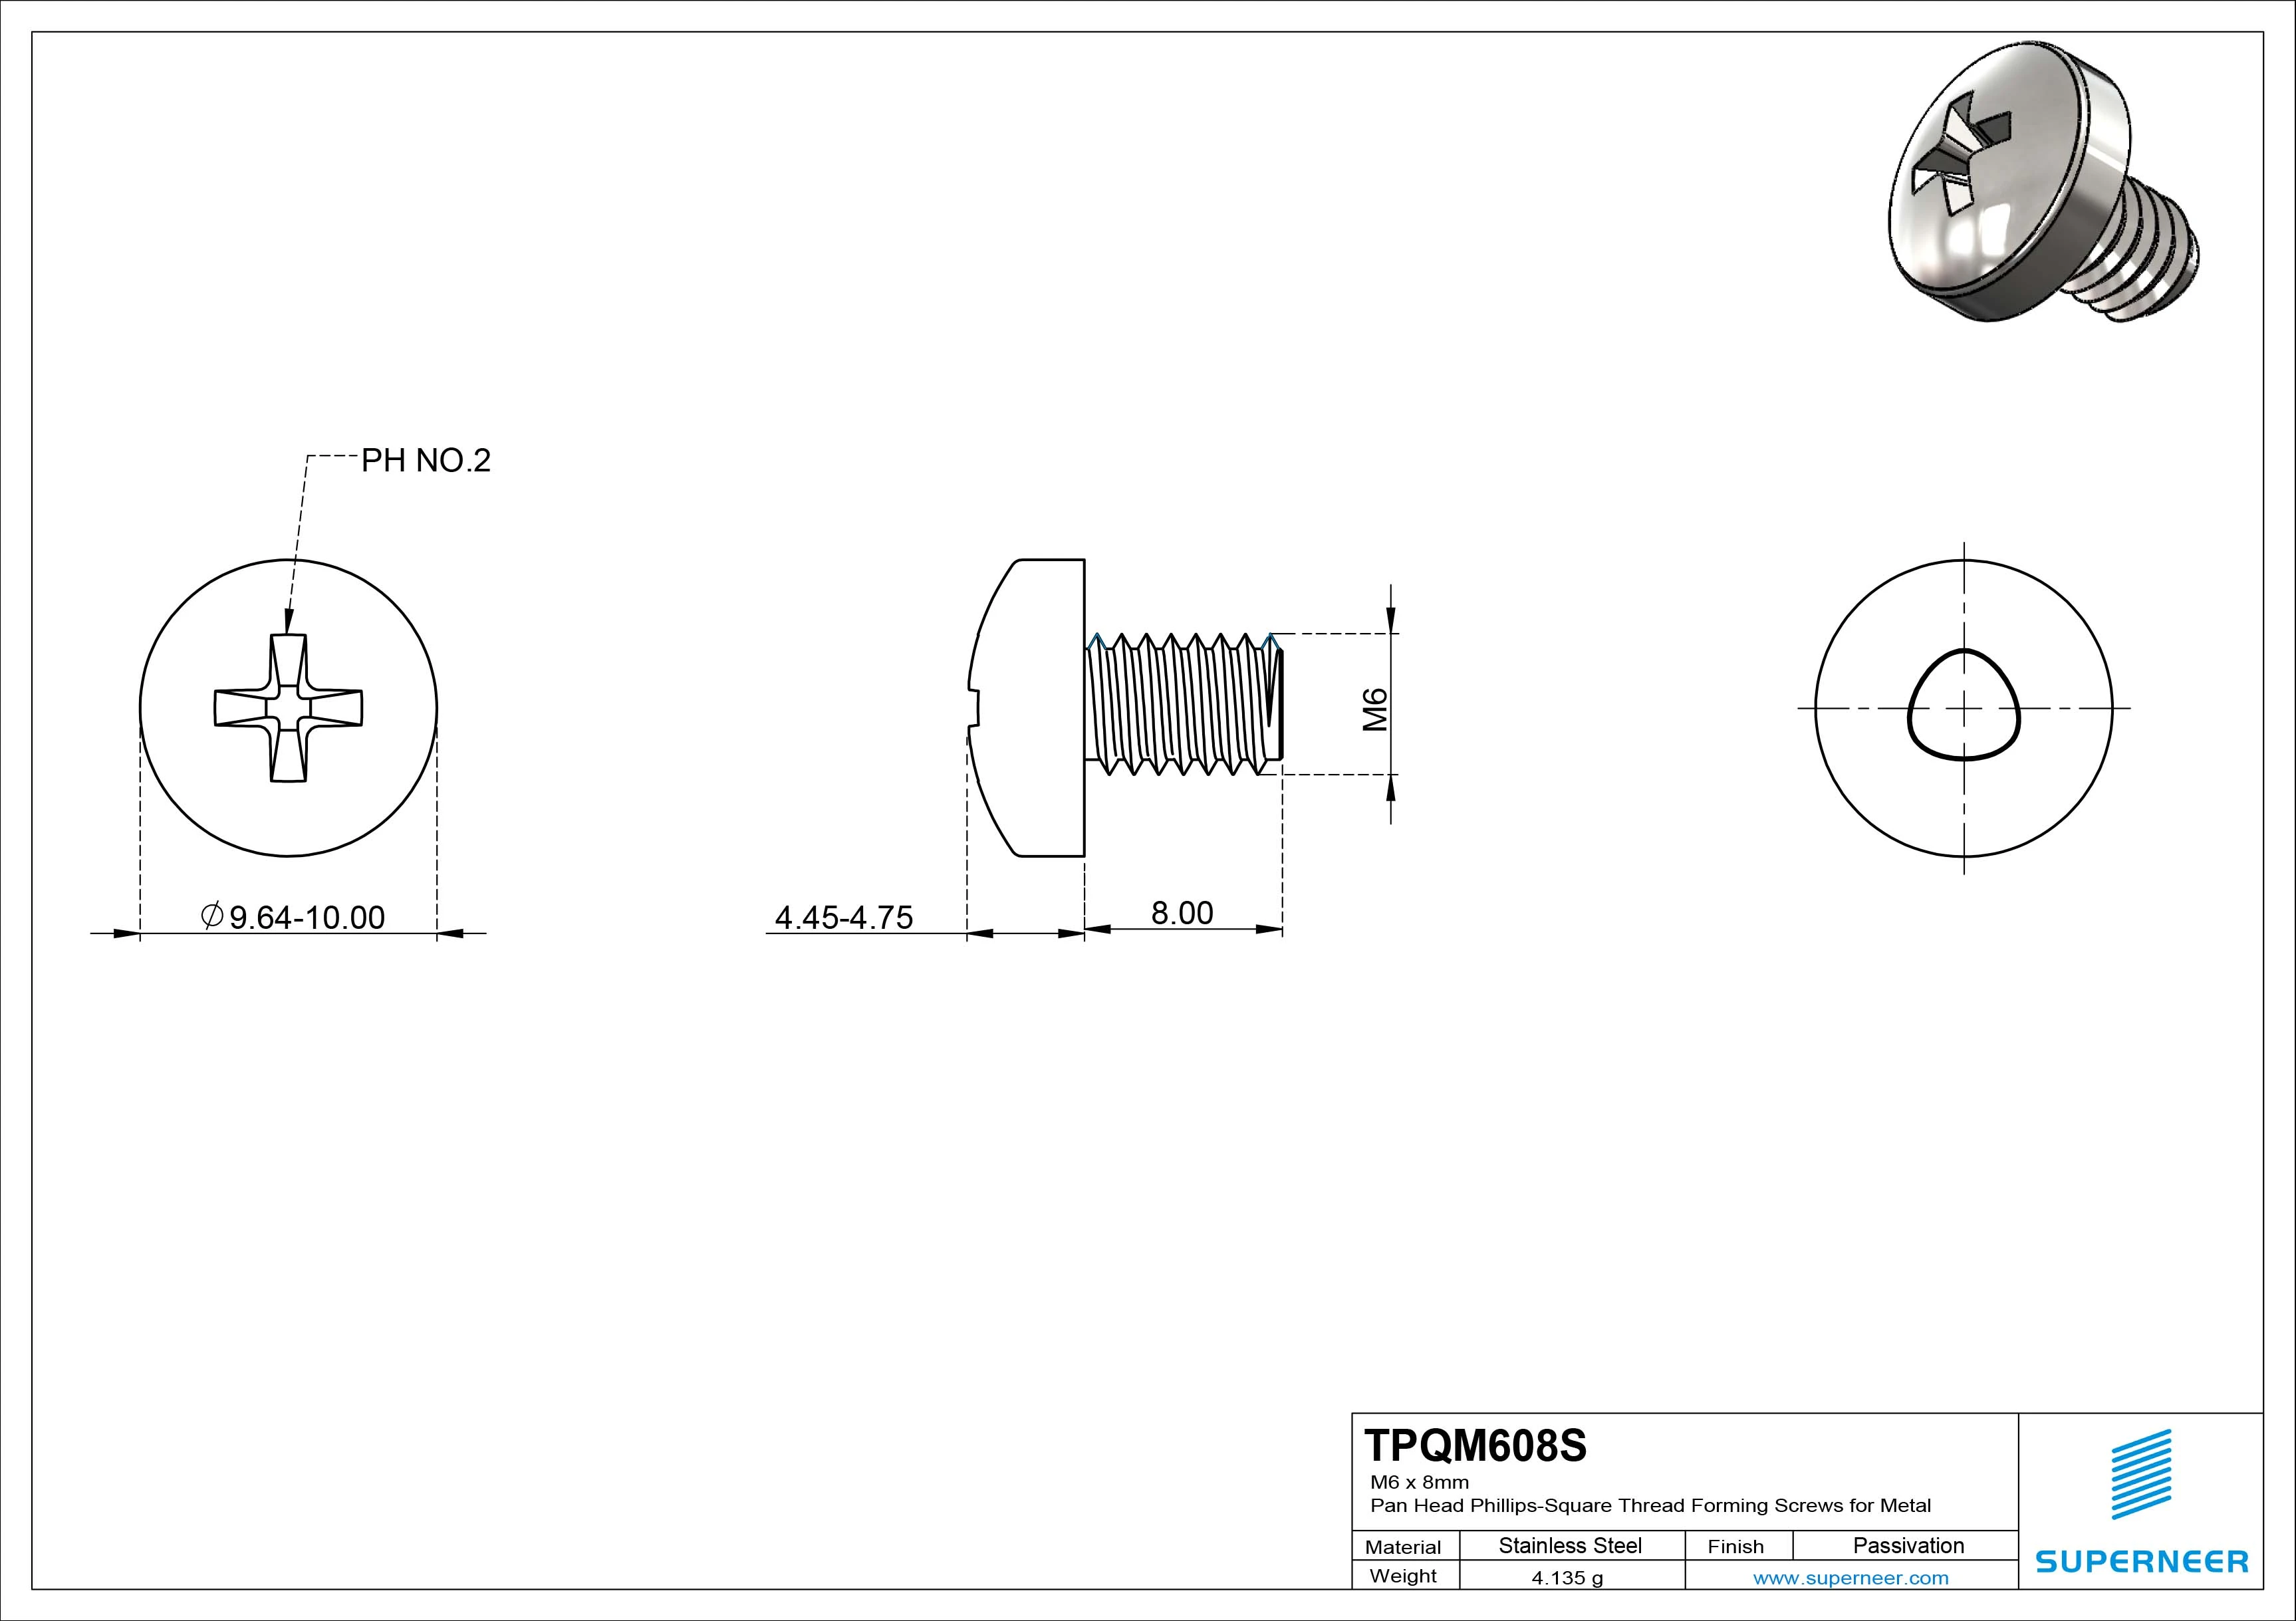 M6 × 8mm Pan Head Phillips-Square Thread Forming Screws for Metal SUS304 Stainless Steel Inox